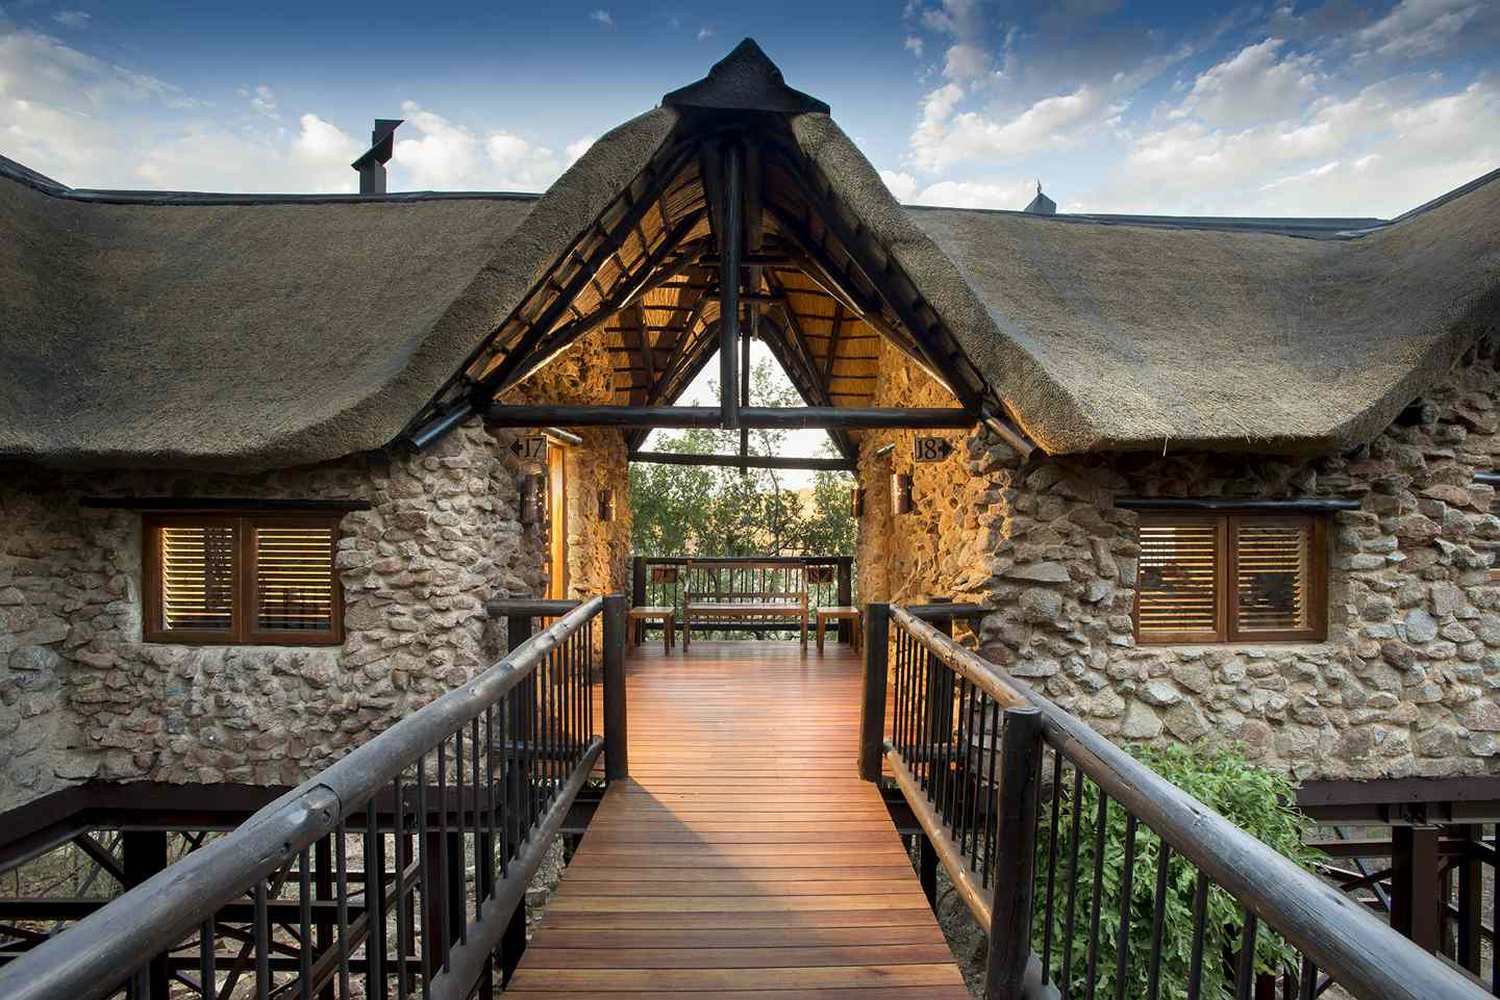 Tshukudu Bush Lodge - South Africa